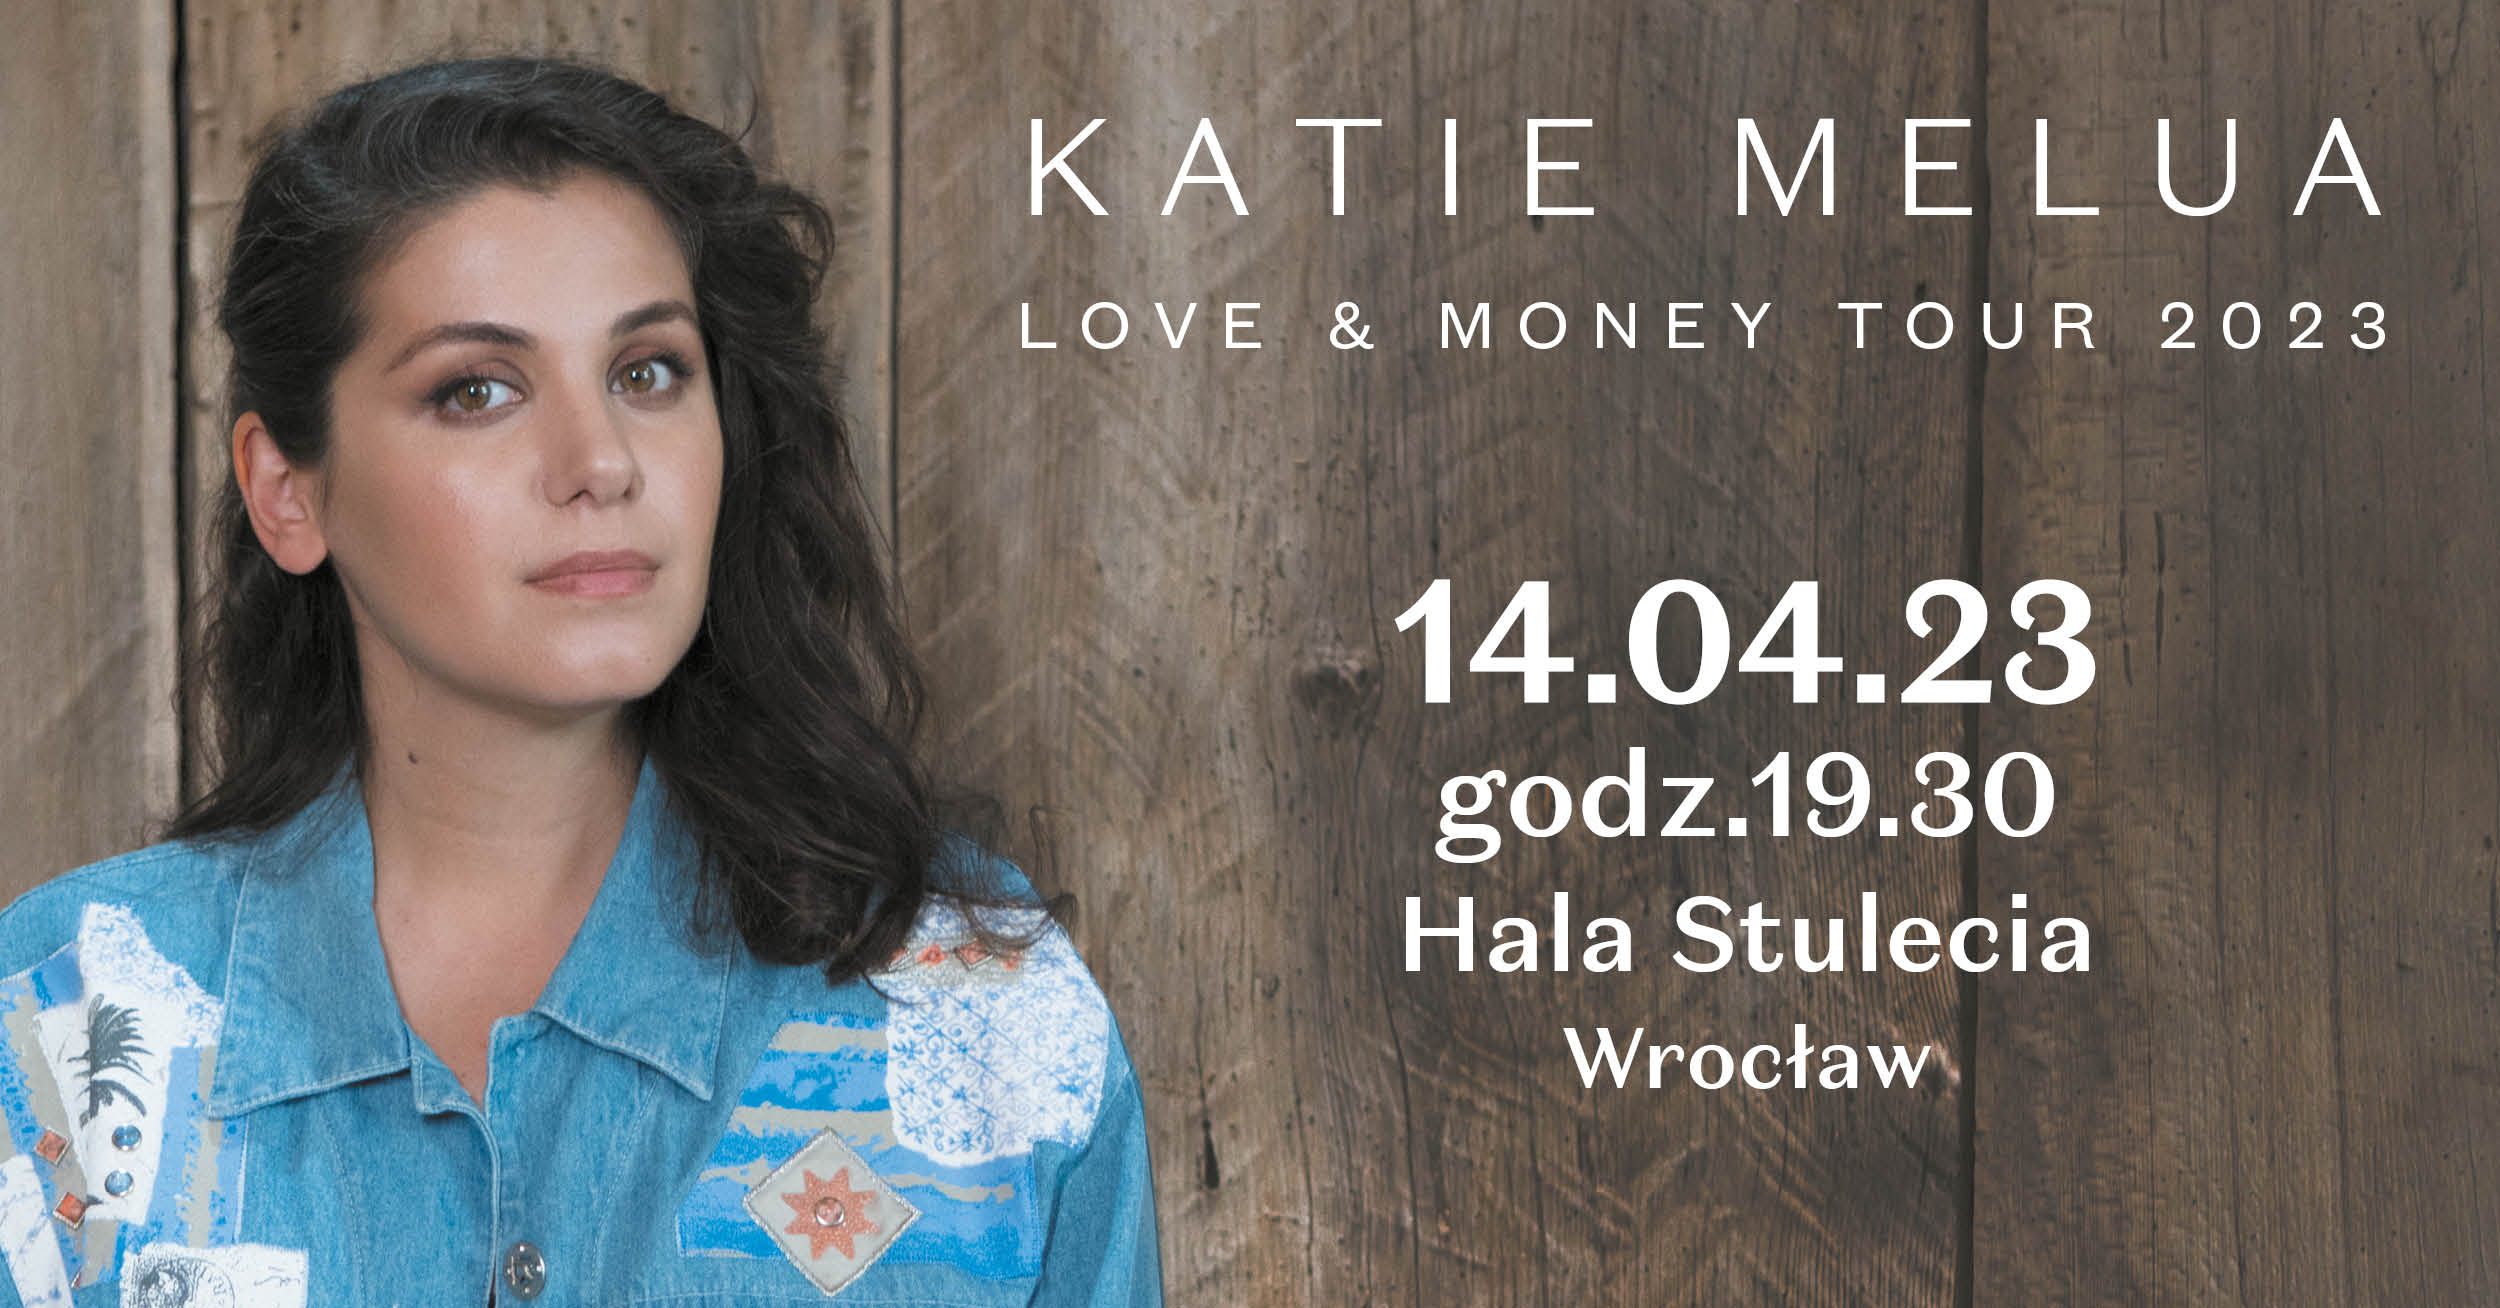 Ethno Jazz Festival KATIE MELUA "Love & Money Tour 2023" Bilety